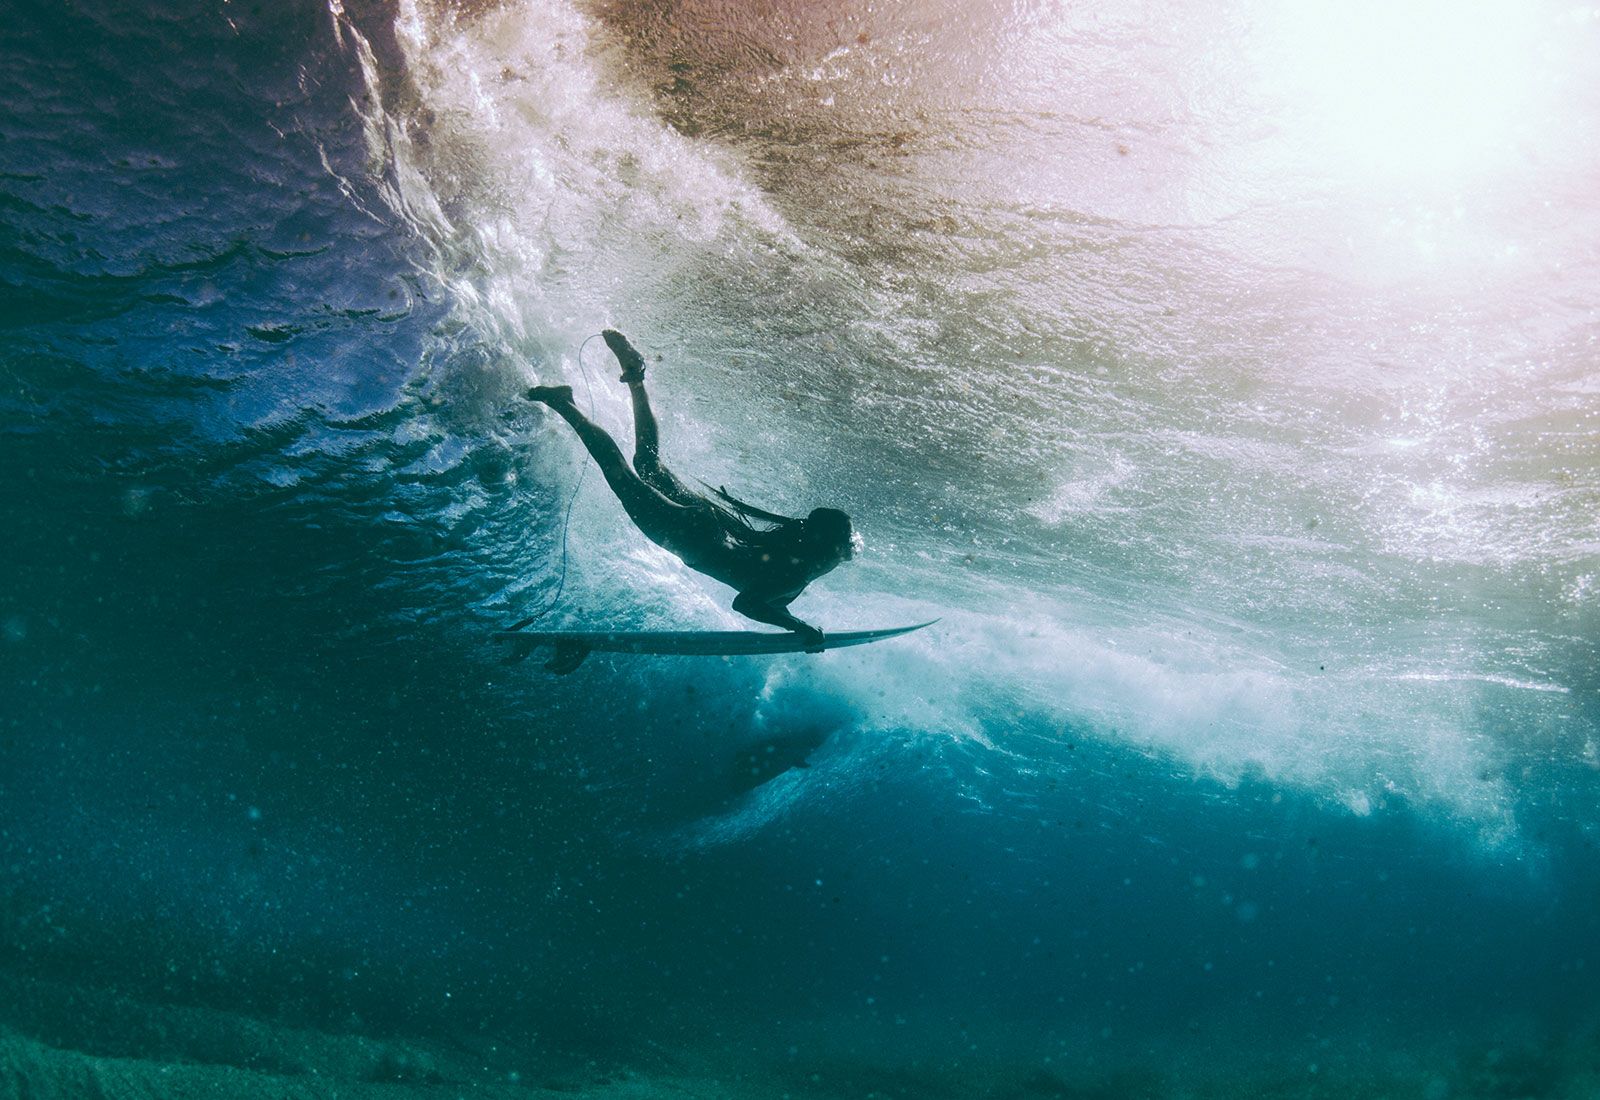 Surfer duck diving under a wave